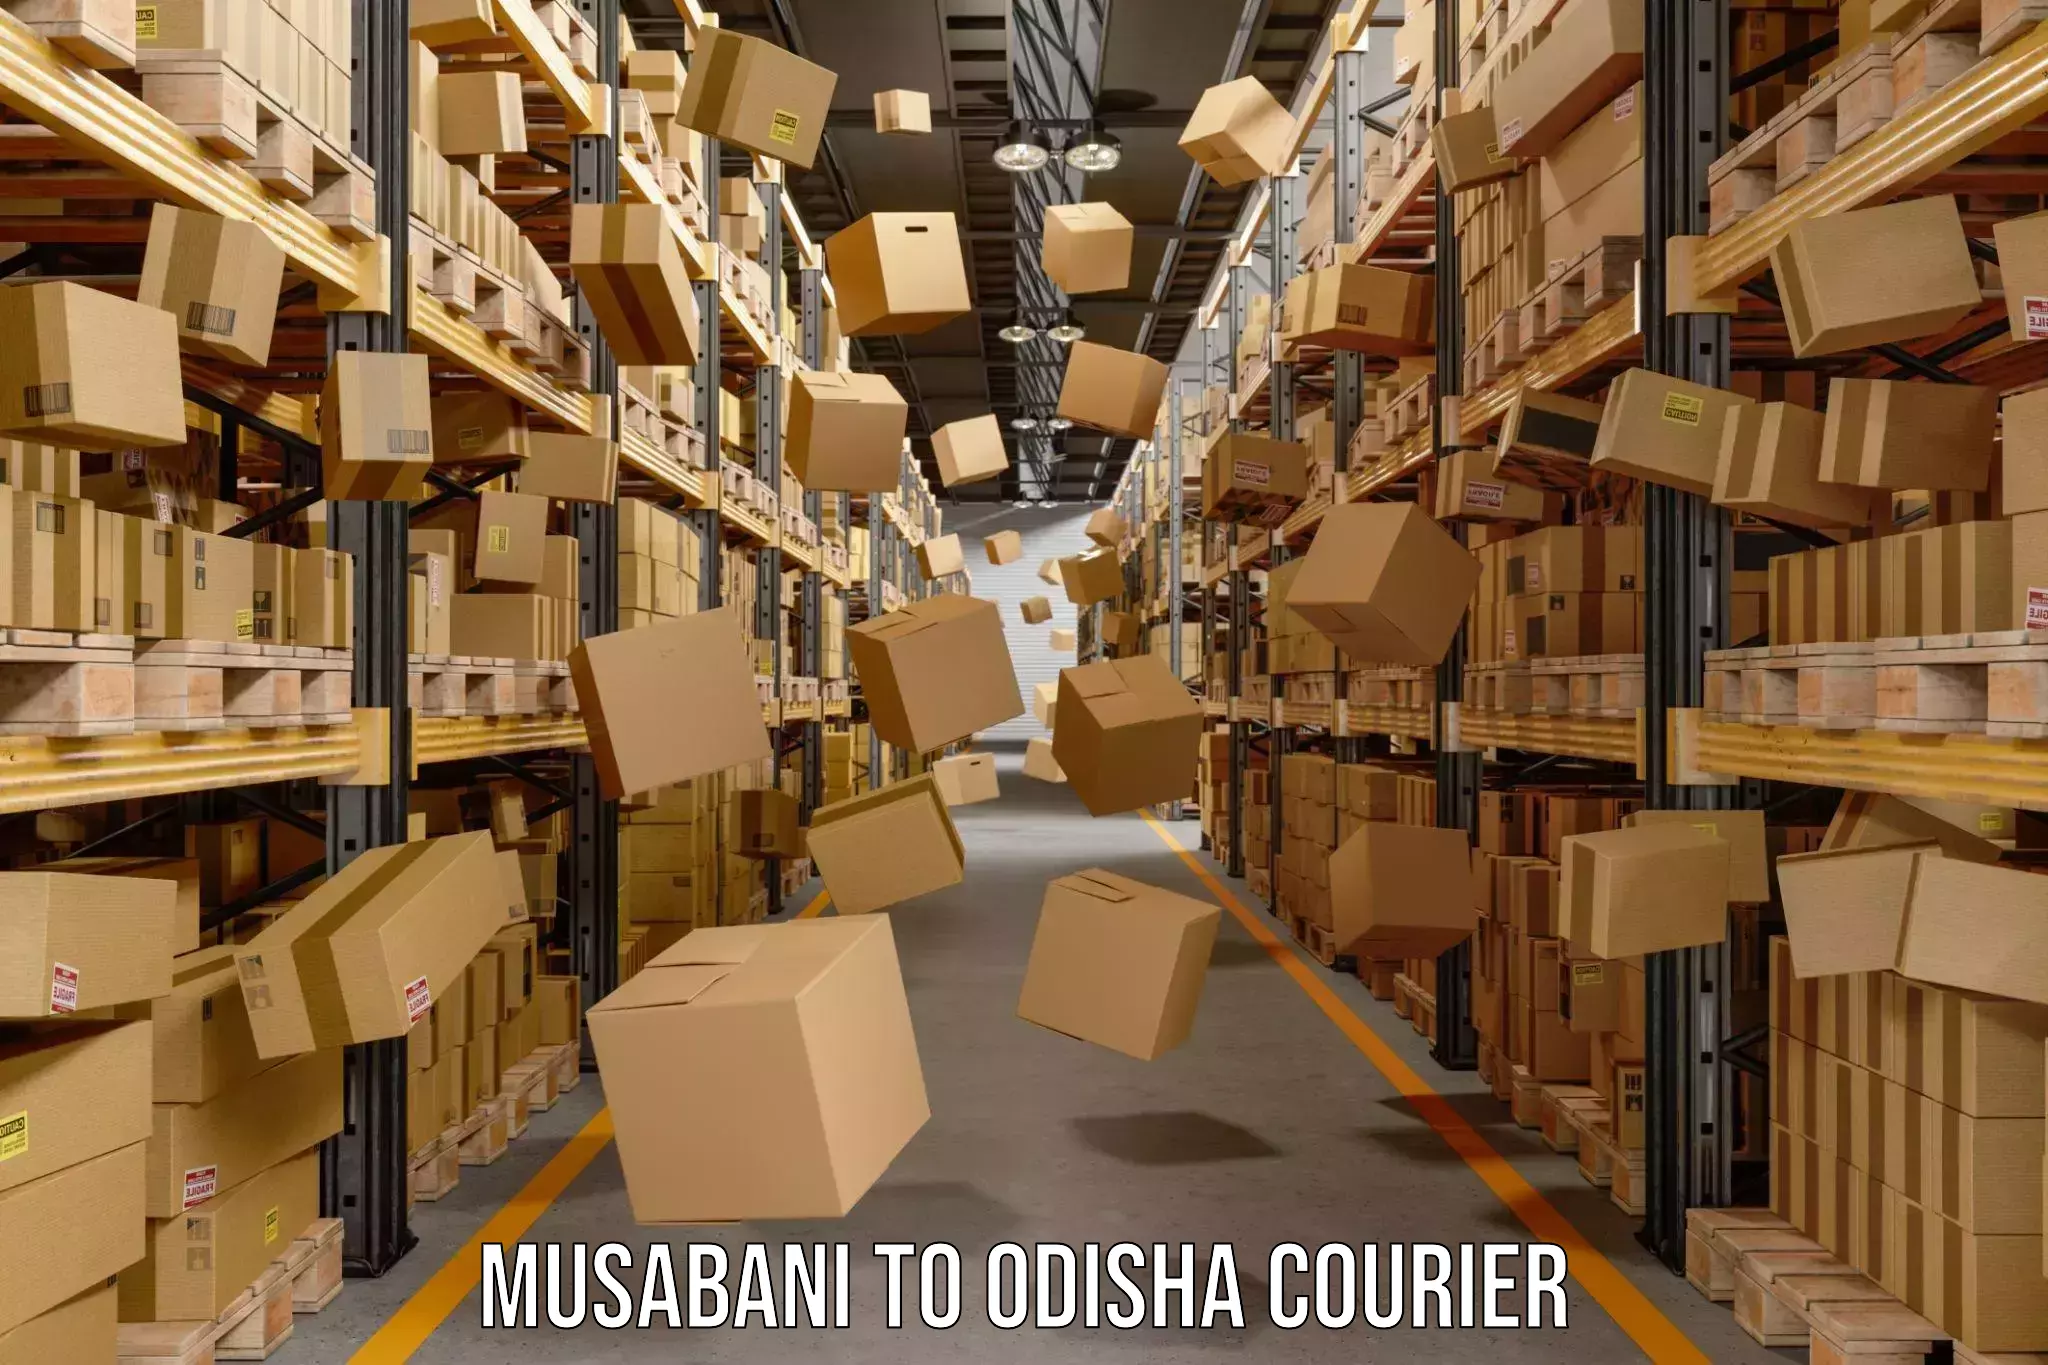 User-friendly delivery service Musabani to Odisha